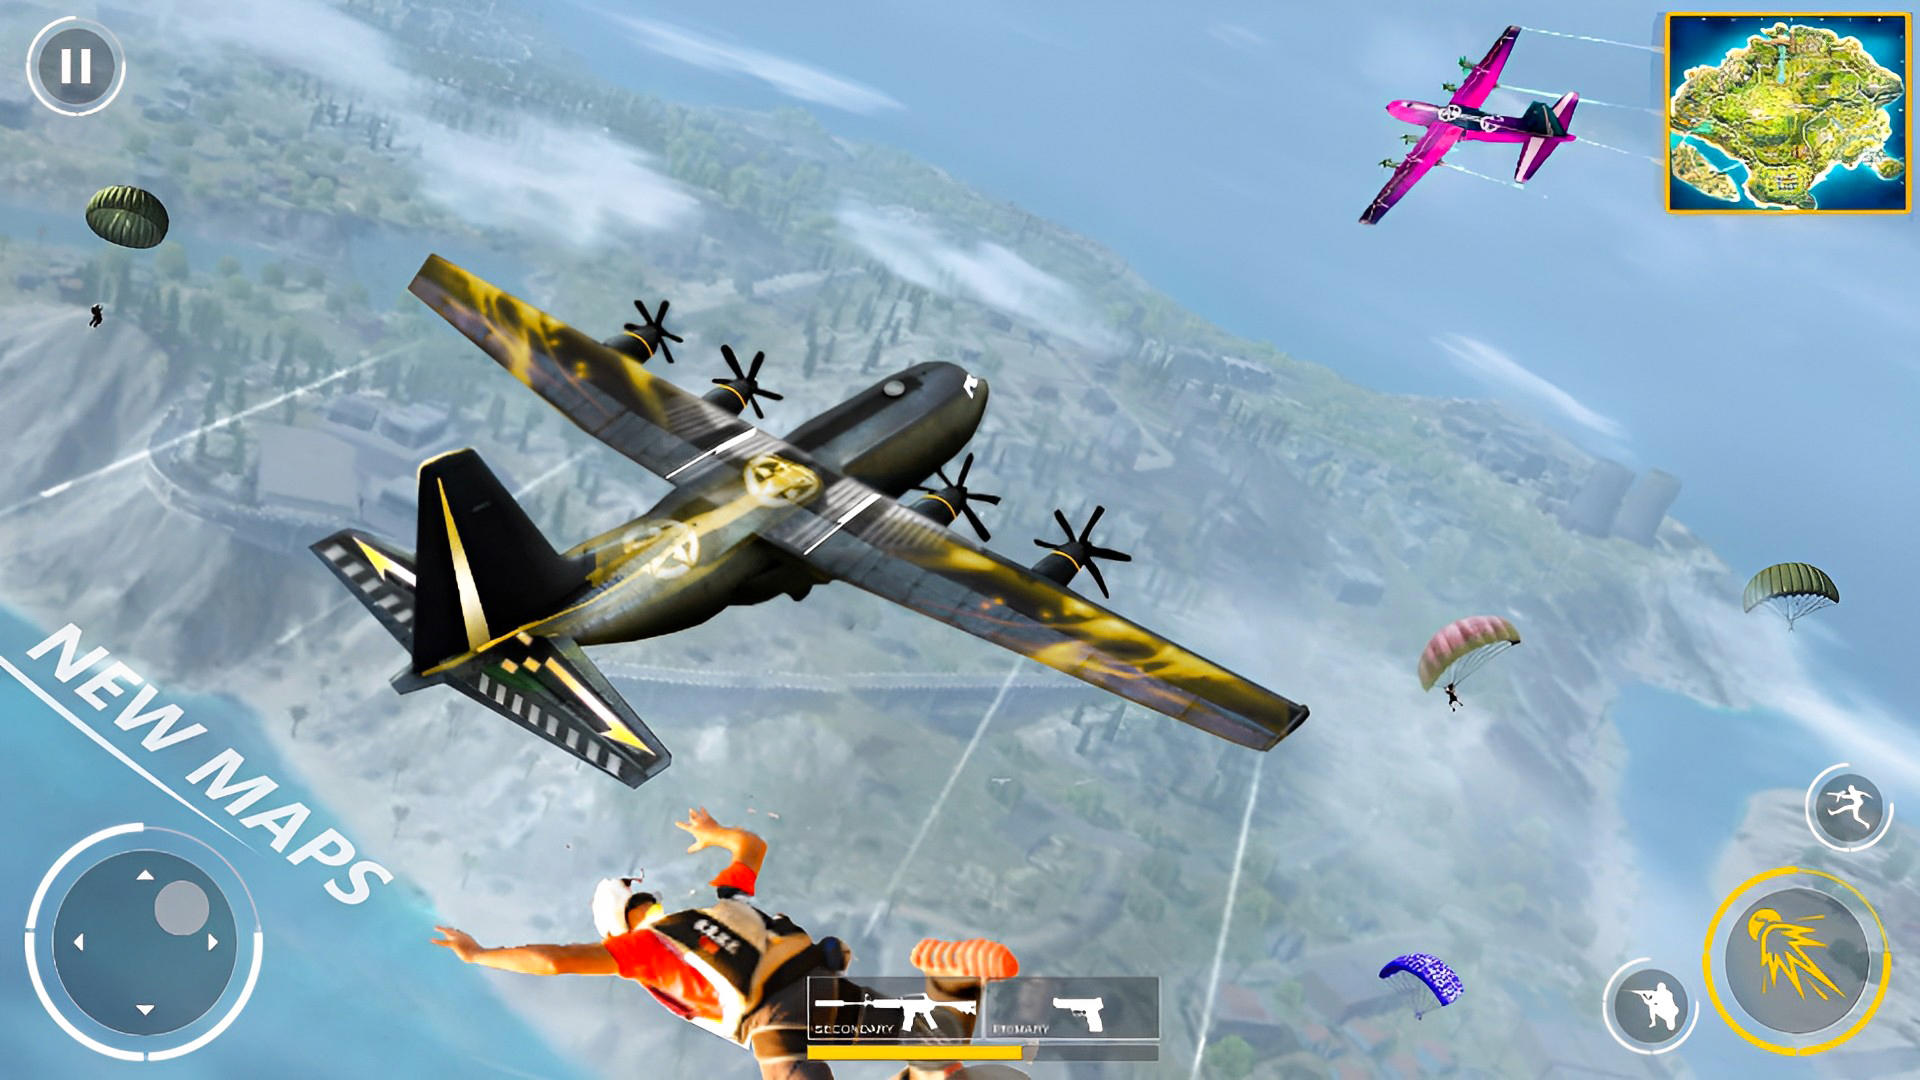 Screenshot 1 of Juego FPS sin conexión Commando Fire 1.0